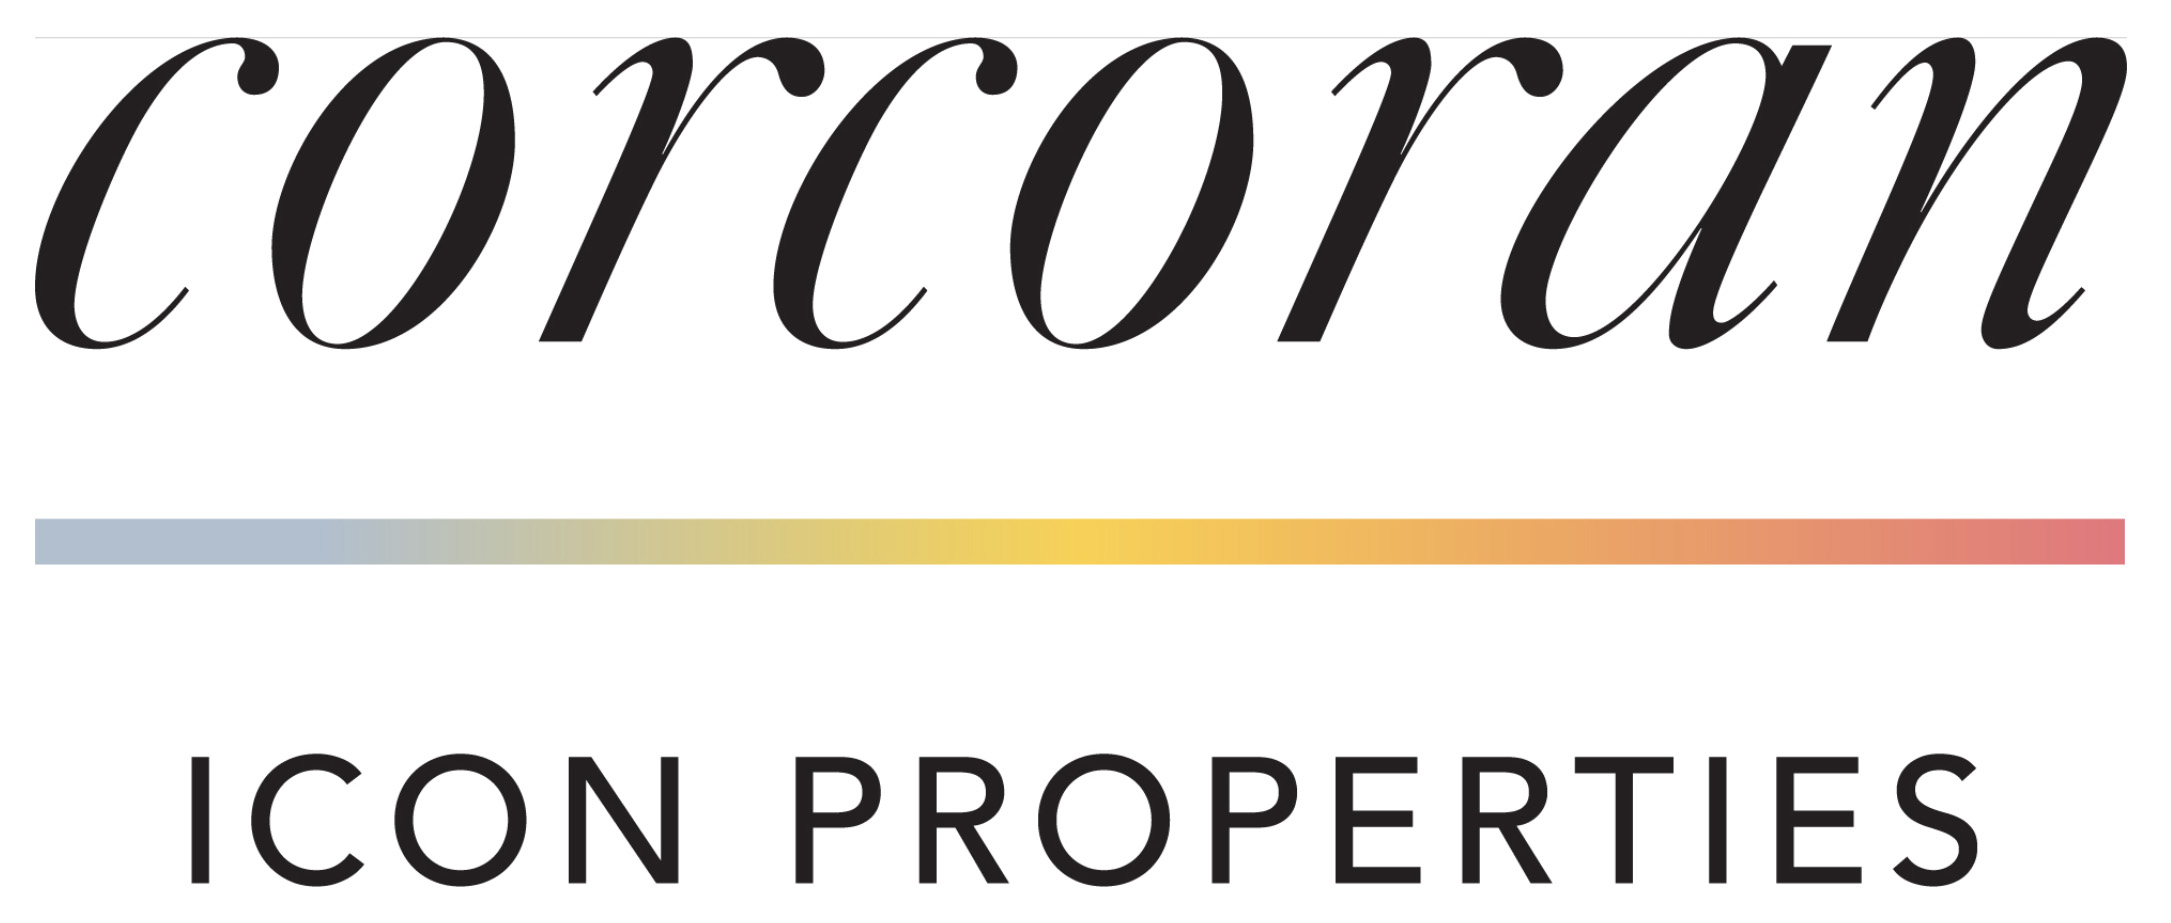 Corcoran Icon logo